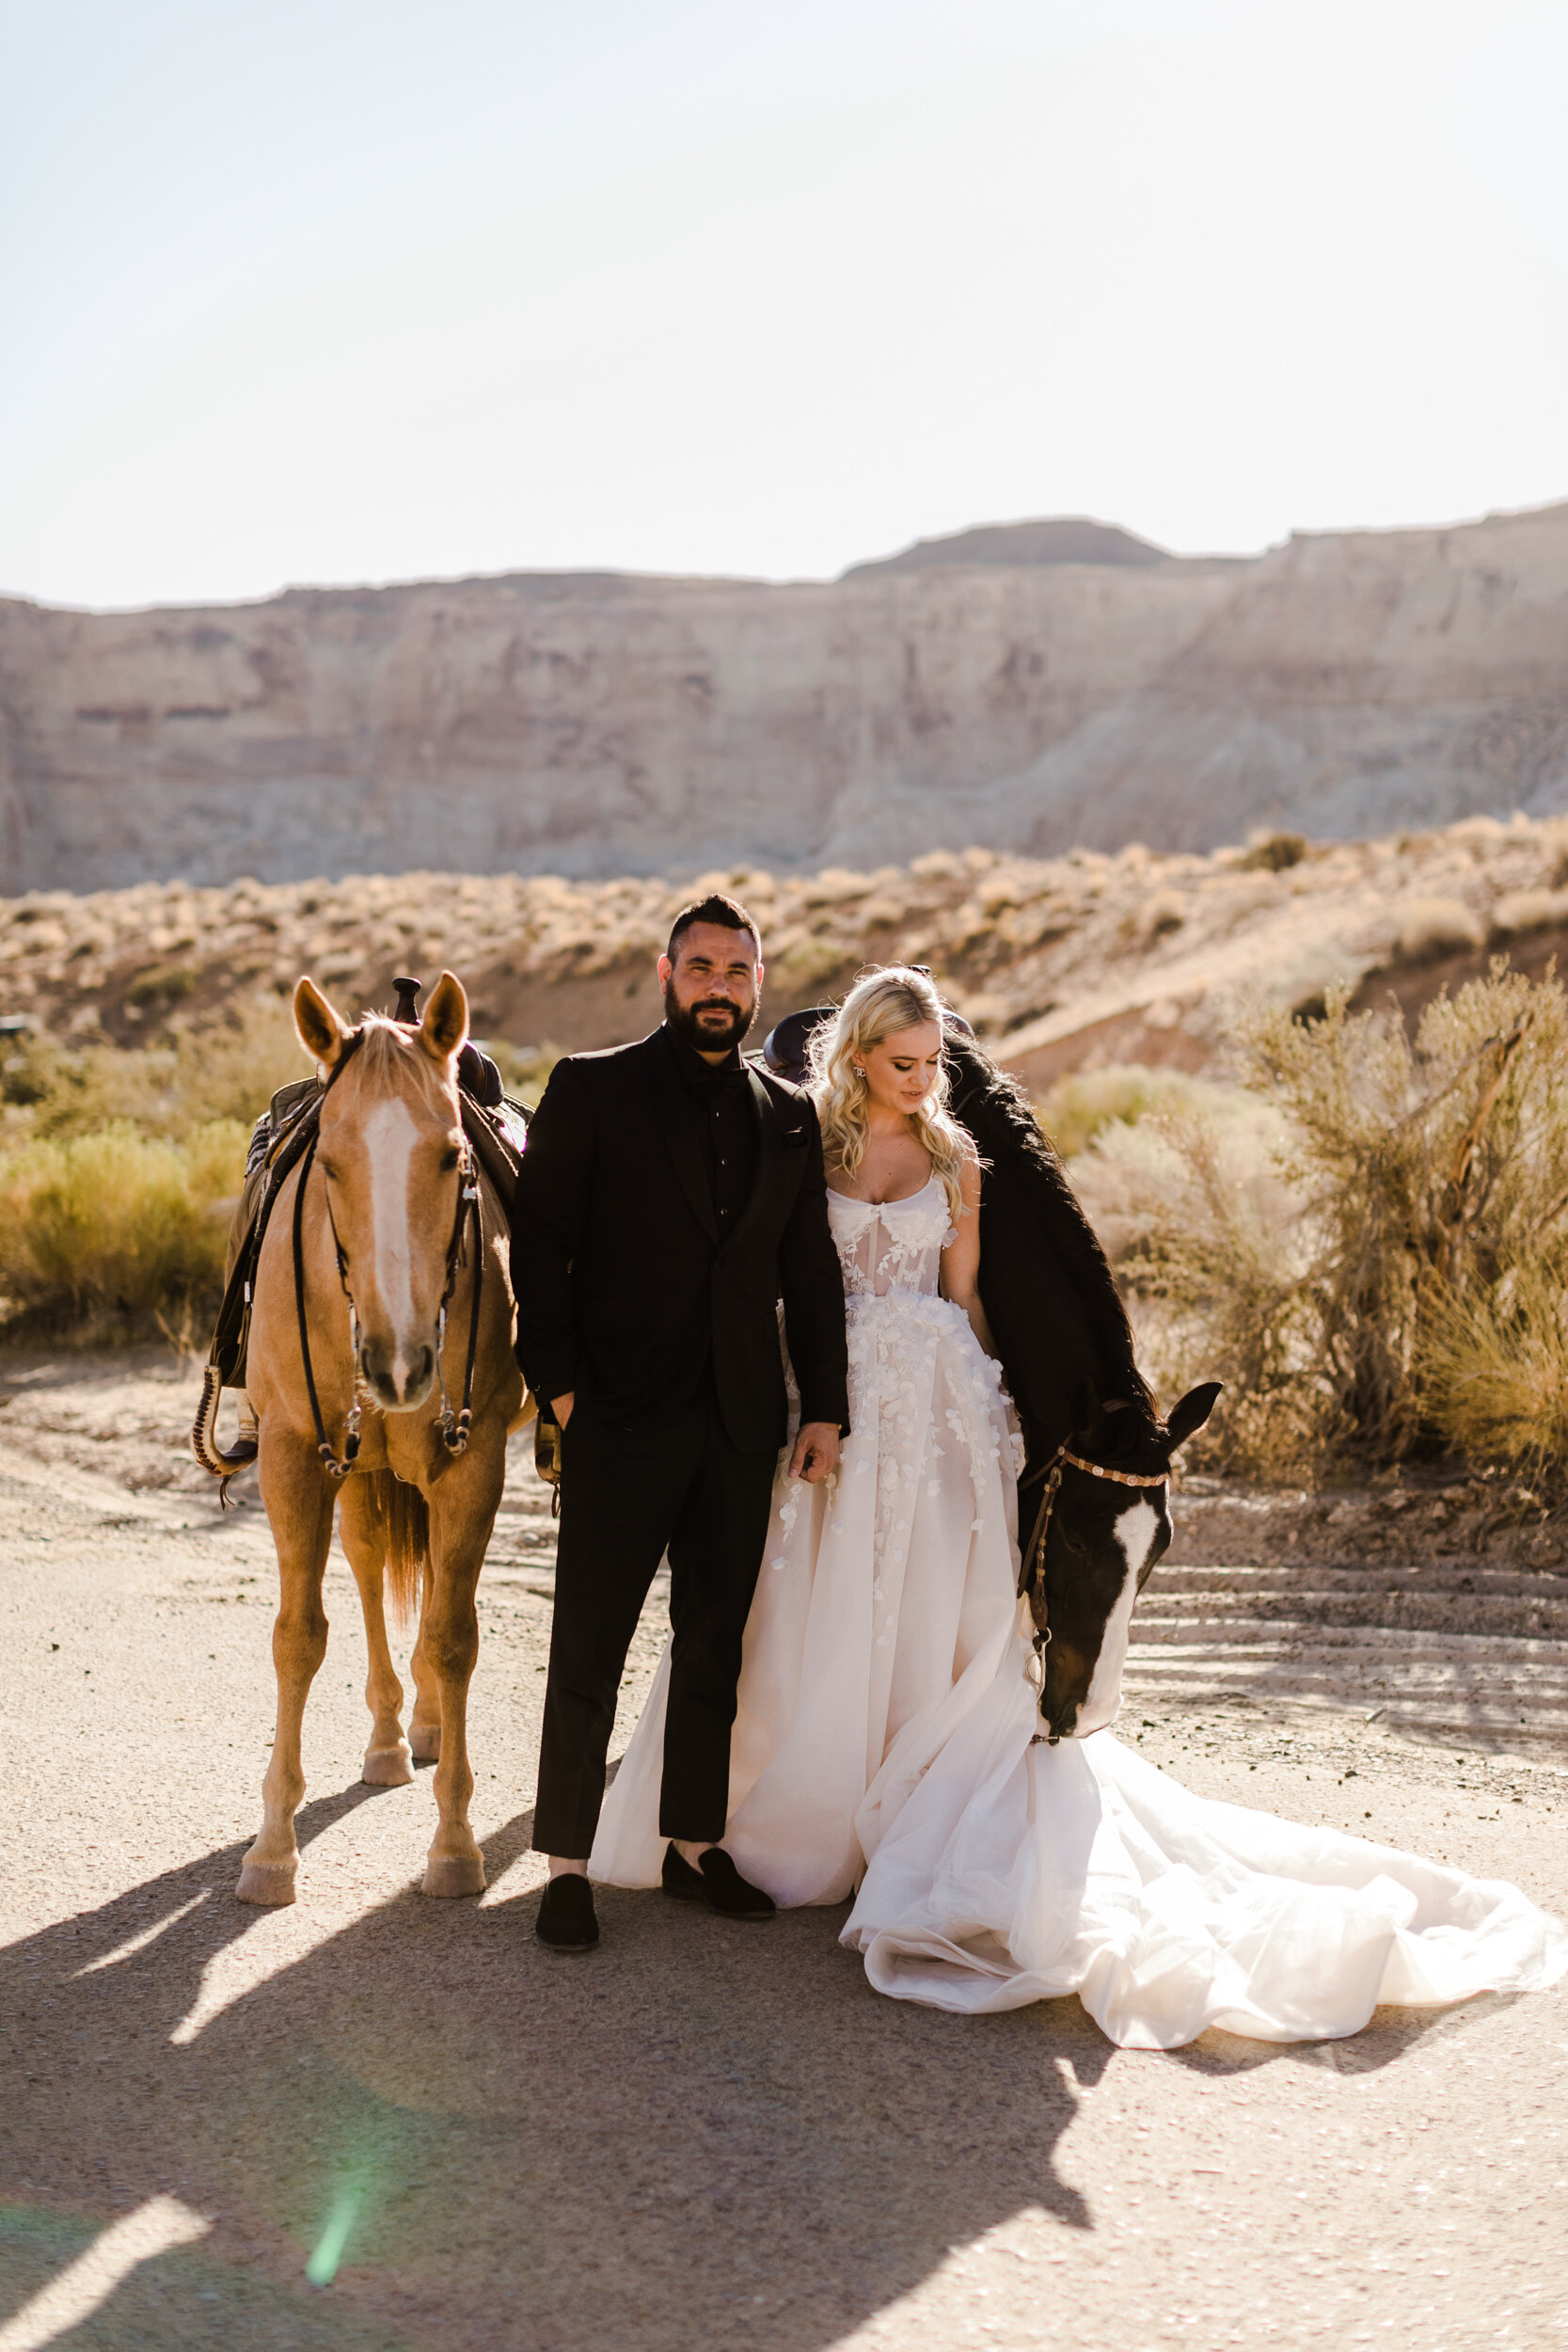 Amangiri horseback riding elopement wedding with horses | The Hearnes photography